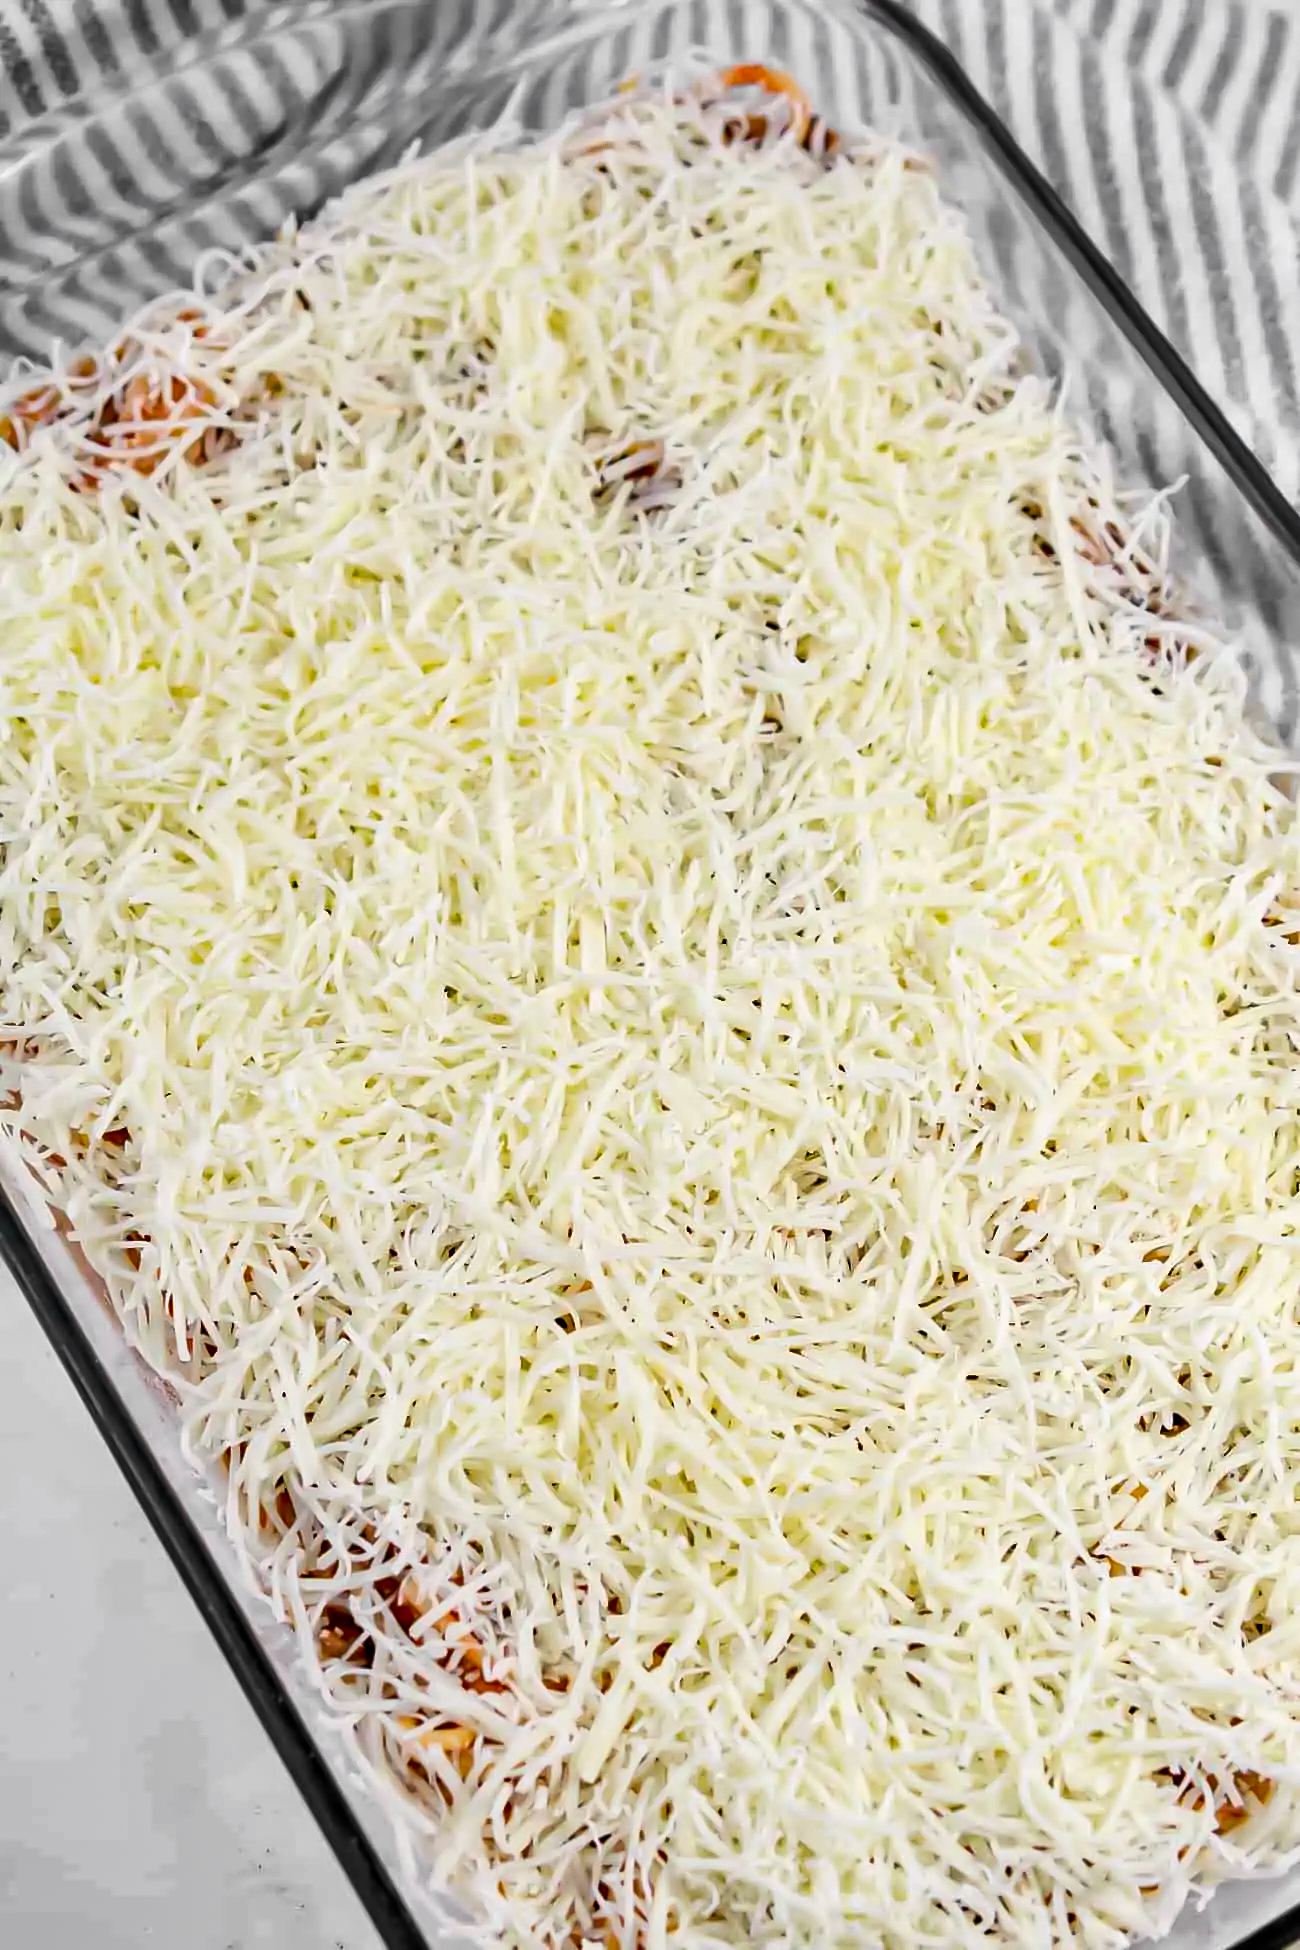 Sprinkle the mozzarella cheese on top.